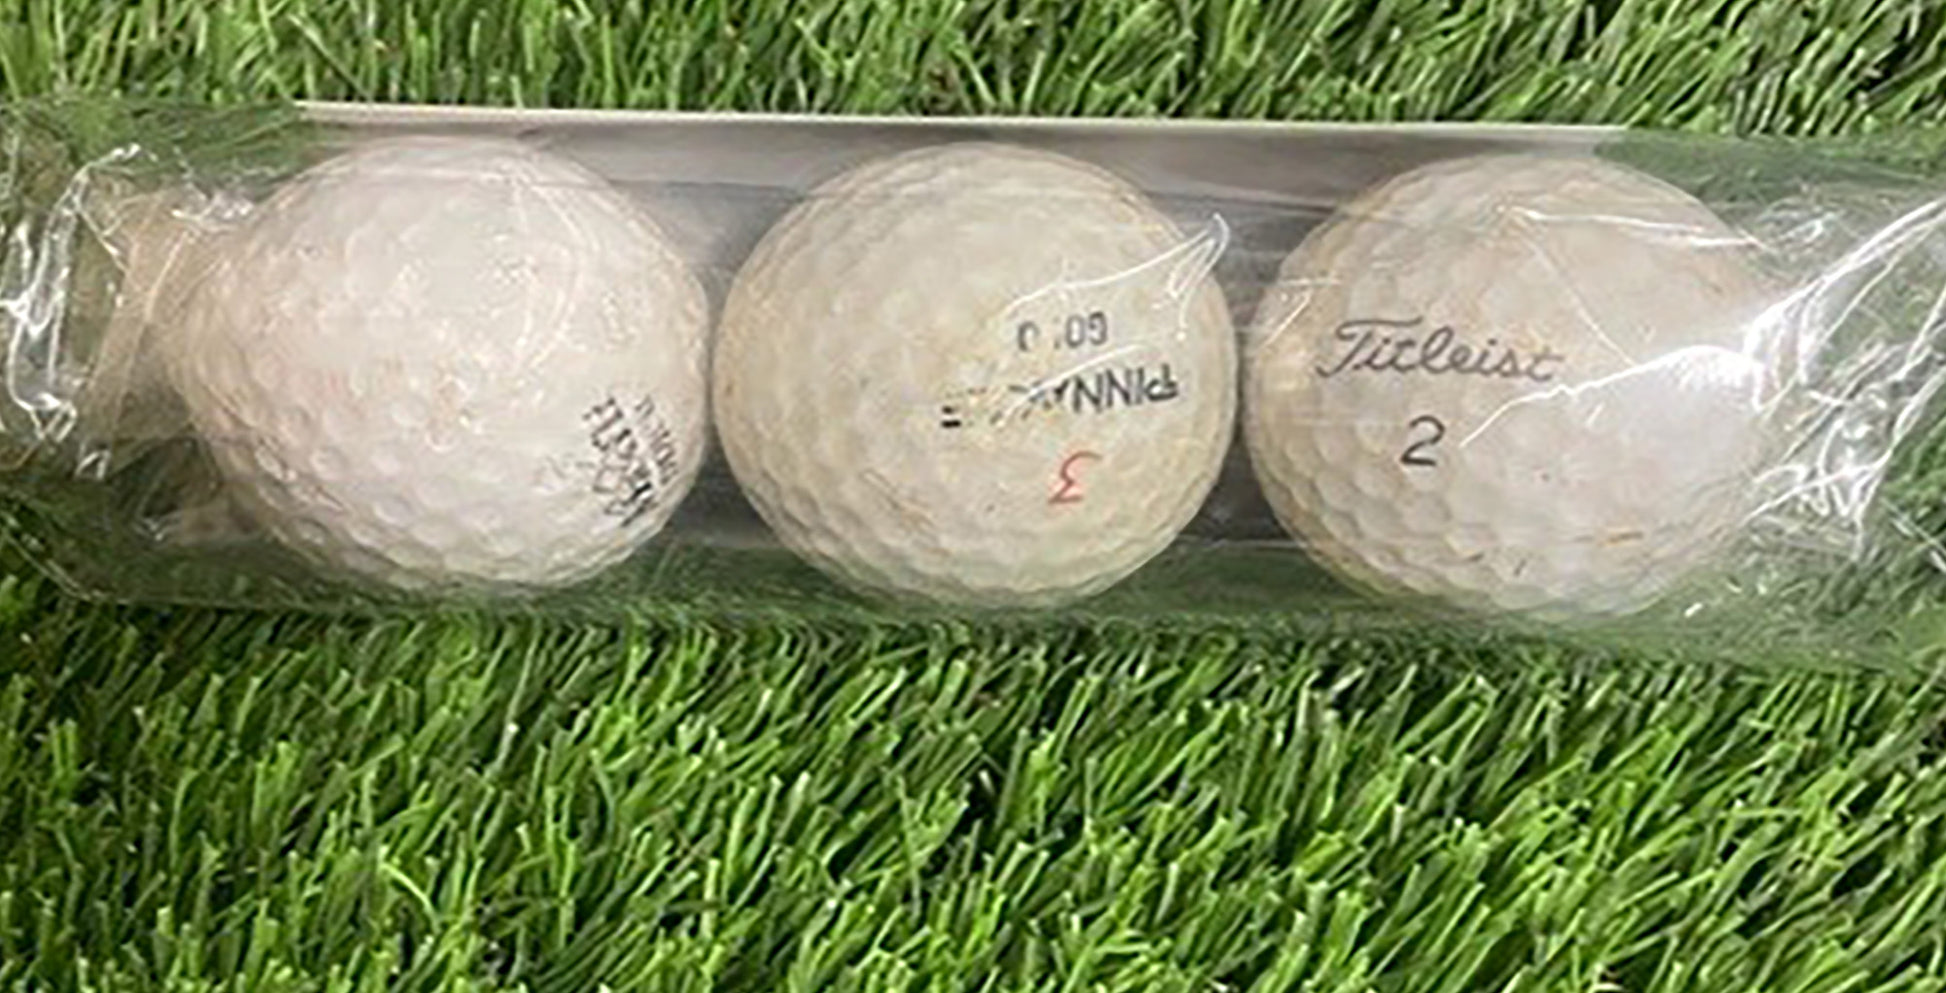 Shitty Golf Balls for Shitty Golfers - Gag Gifts - Funny Golf